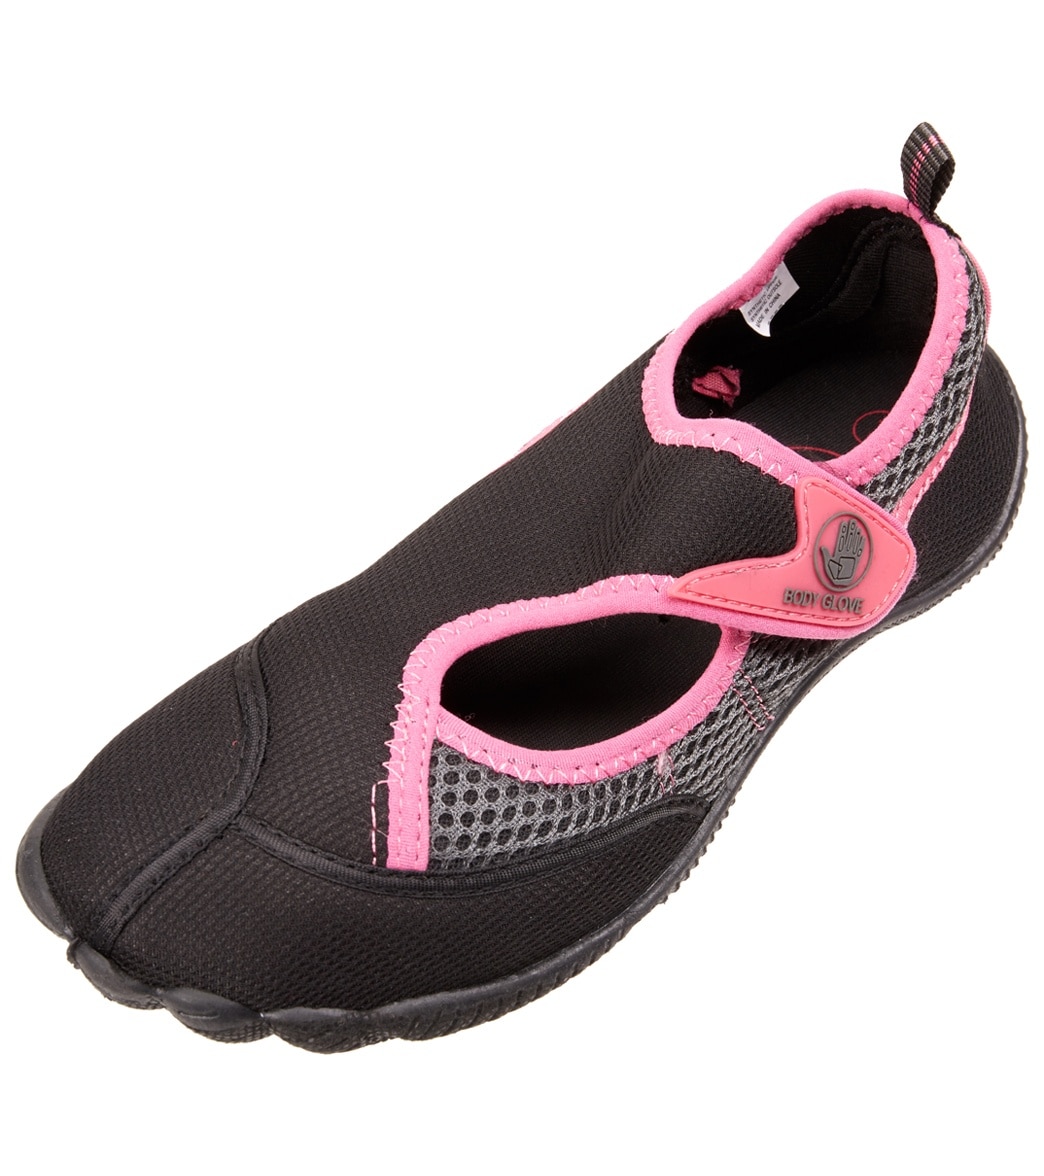 Body Glove Footwear Women's Horizon Water Shoe at SwimOutlet.com